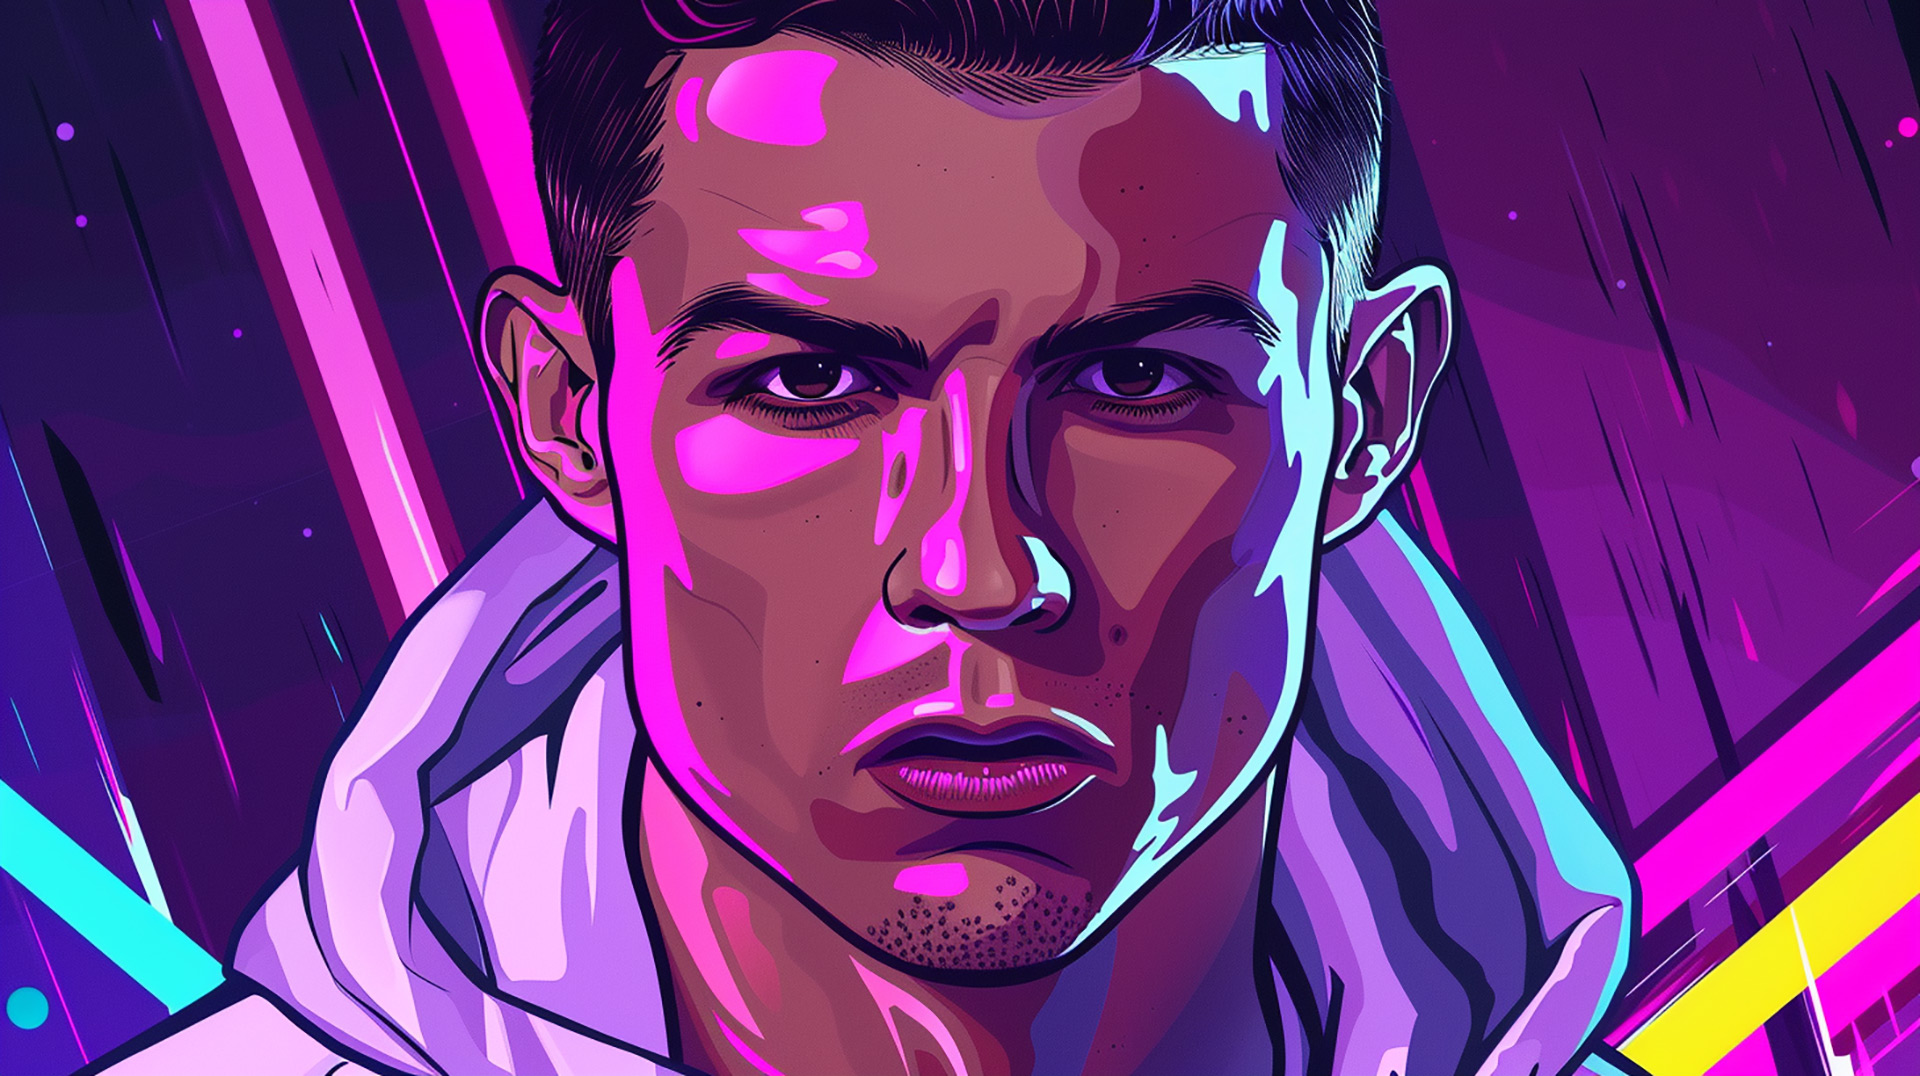 4K Ronaldo Anime Image: Perfect for Desktop